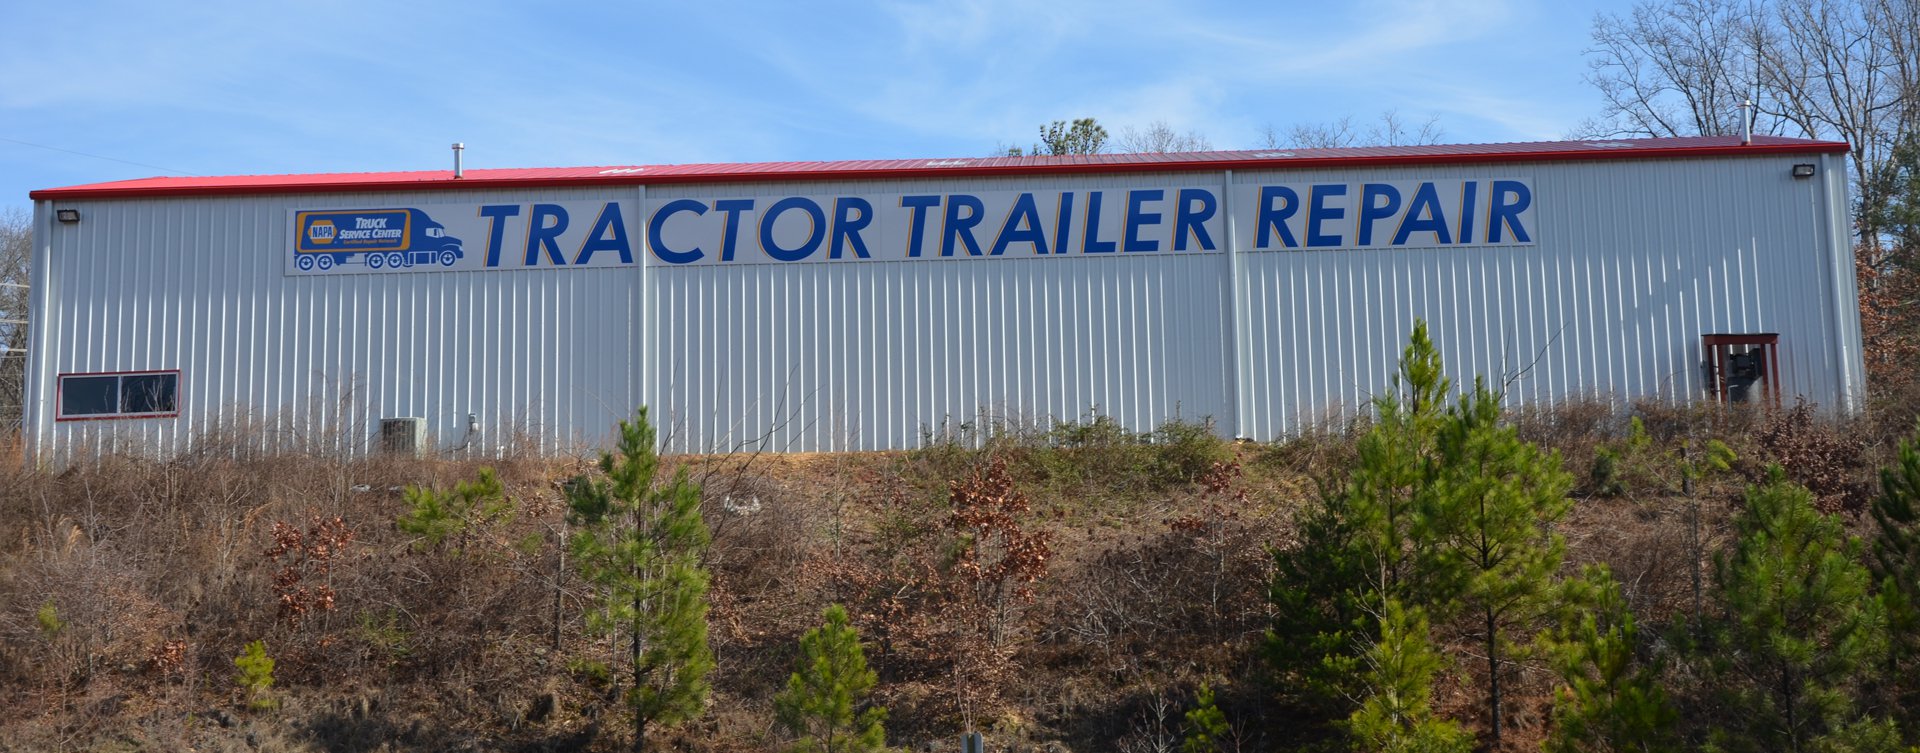 Tractor Trailer Repair Service